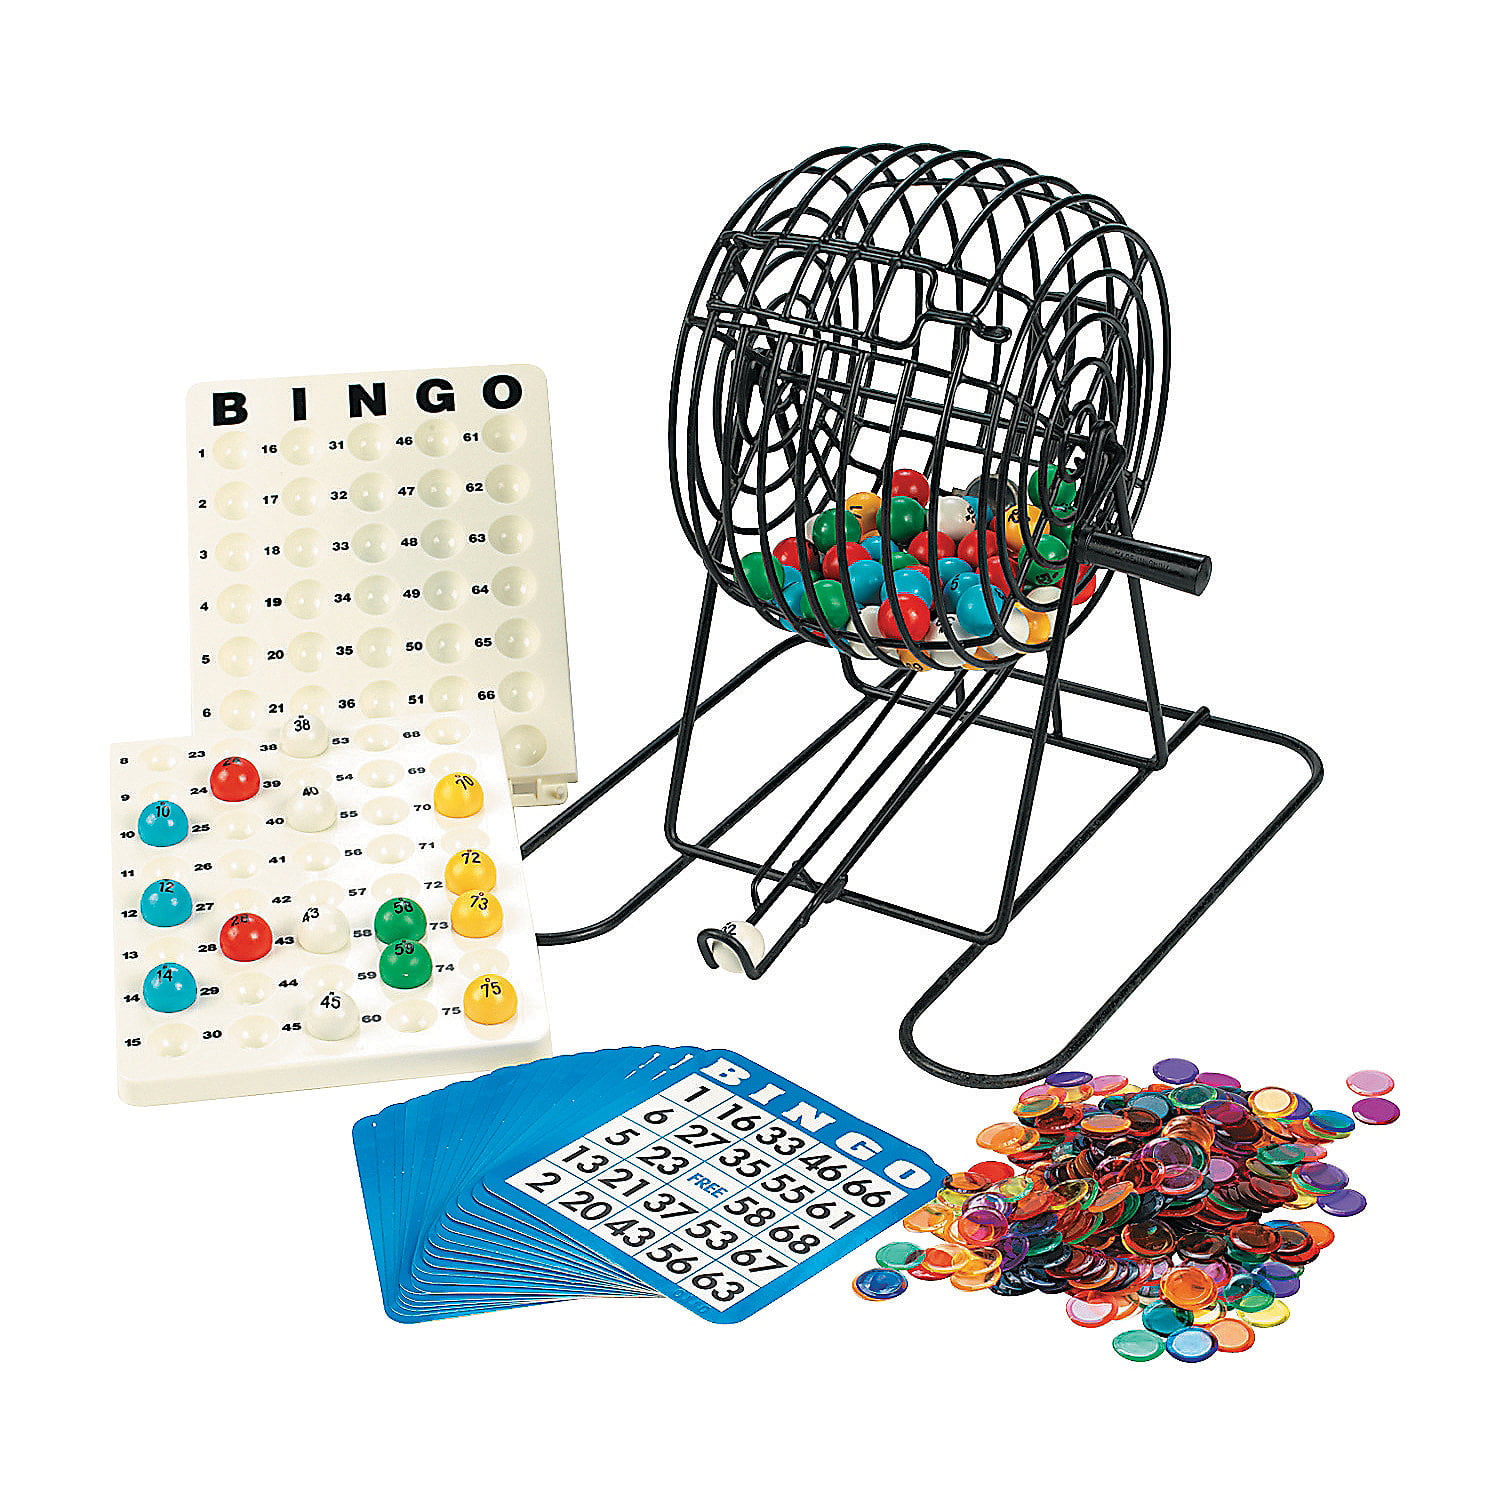 Bingo supplies uk